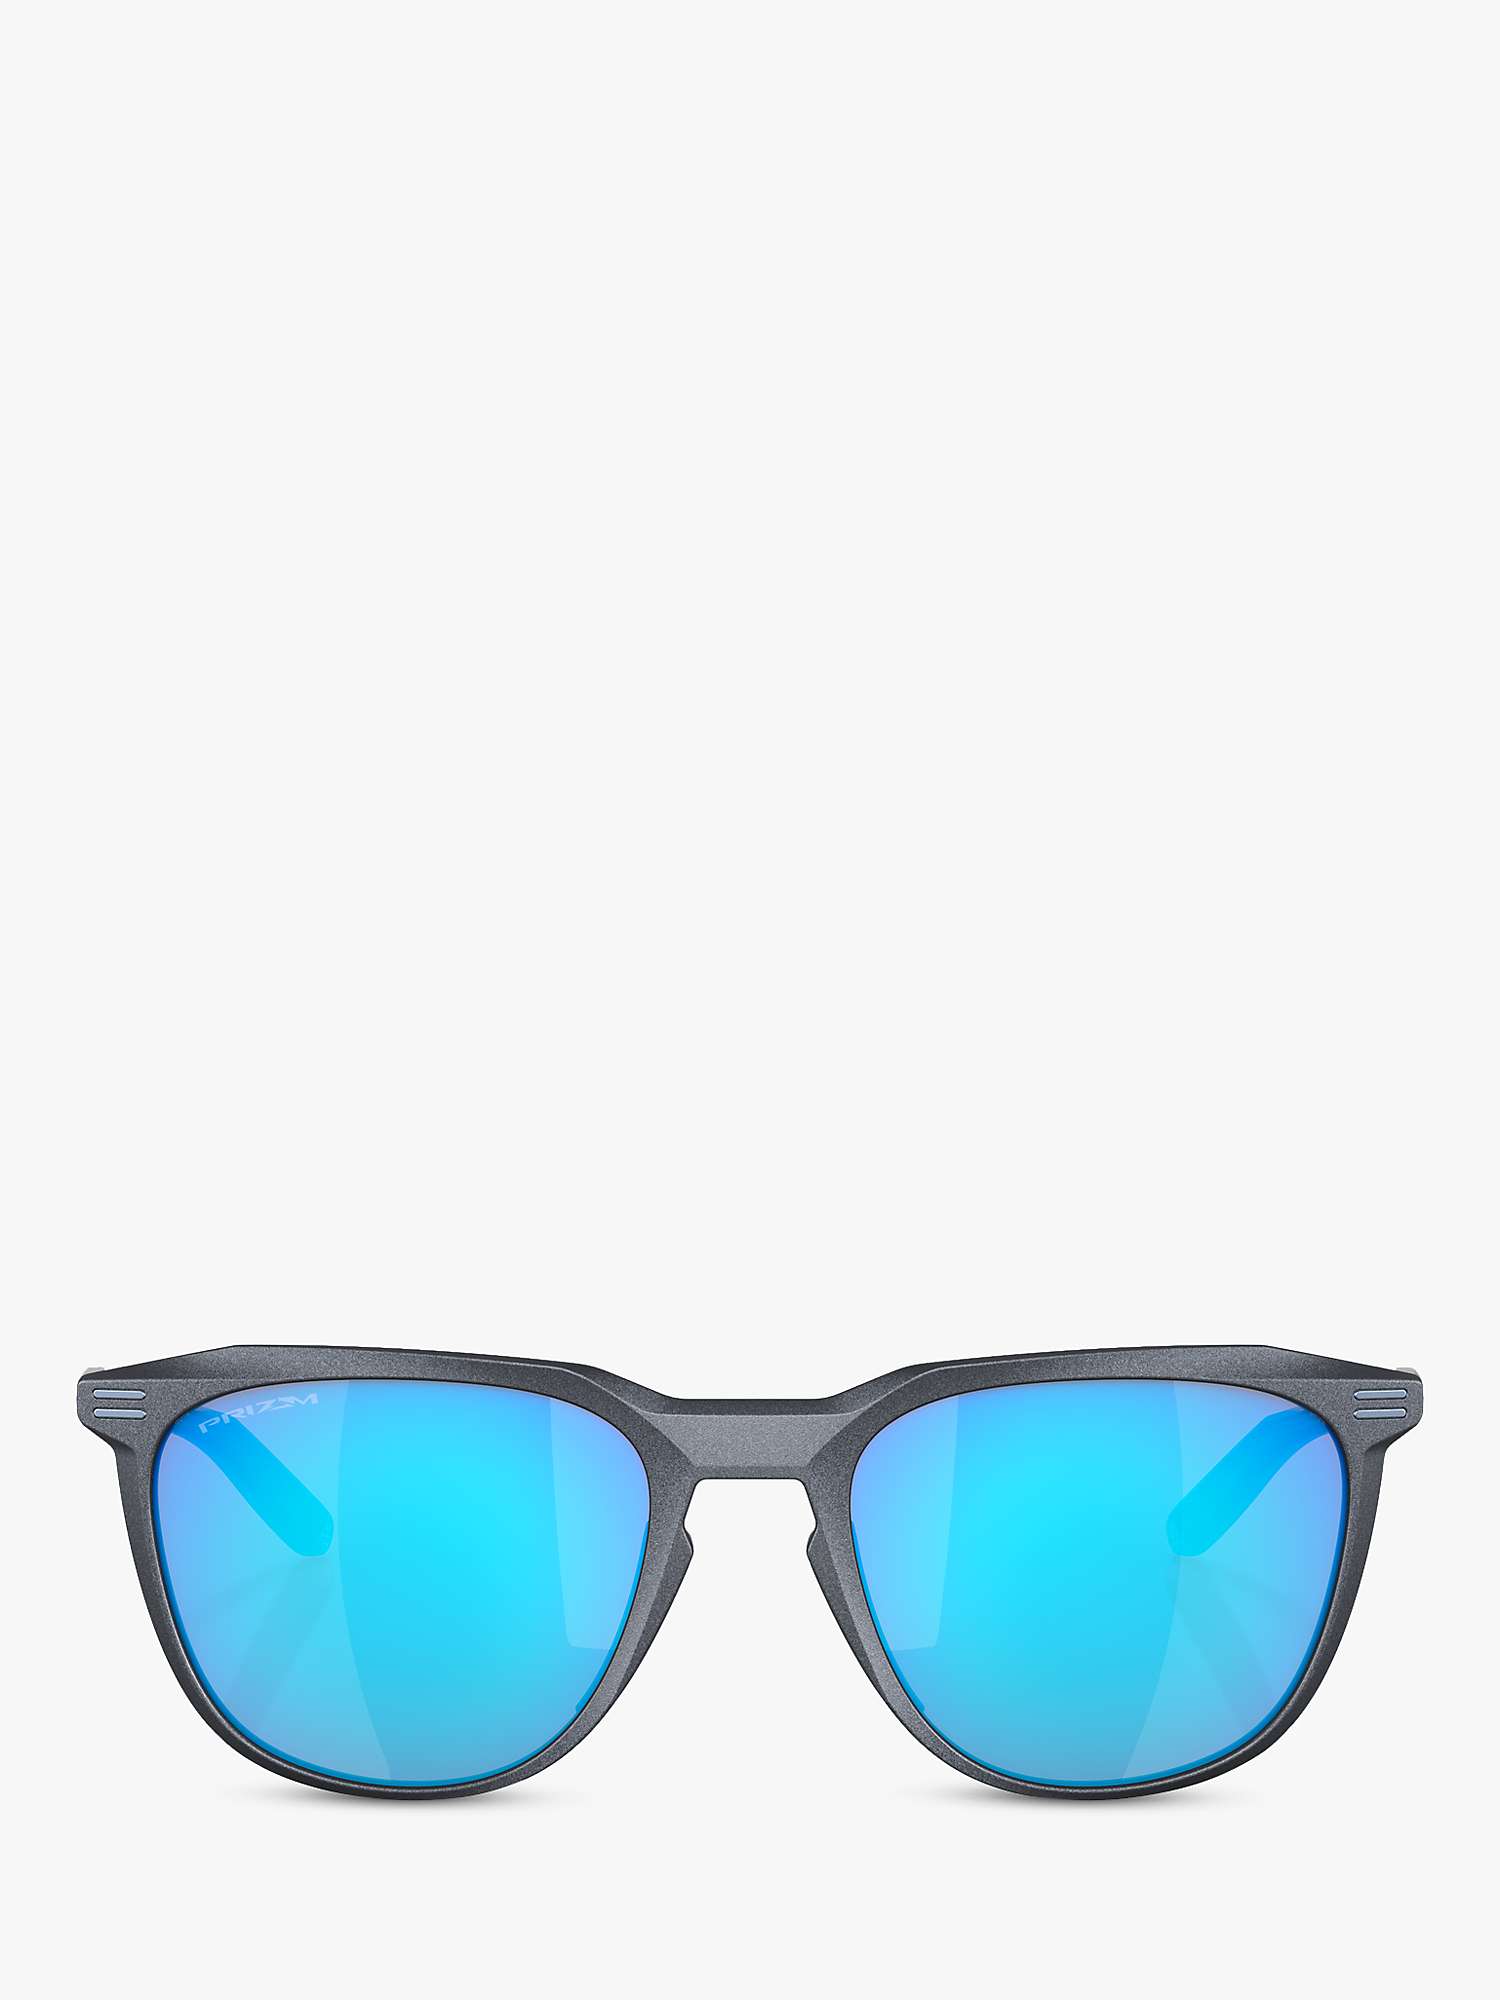 Buy Oakley OO9286 Men's Thurso Sunglasses, Blue Steel Online at johnlewis.com